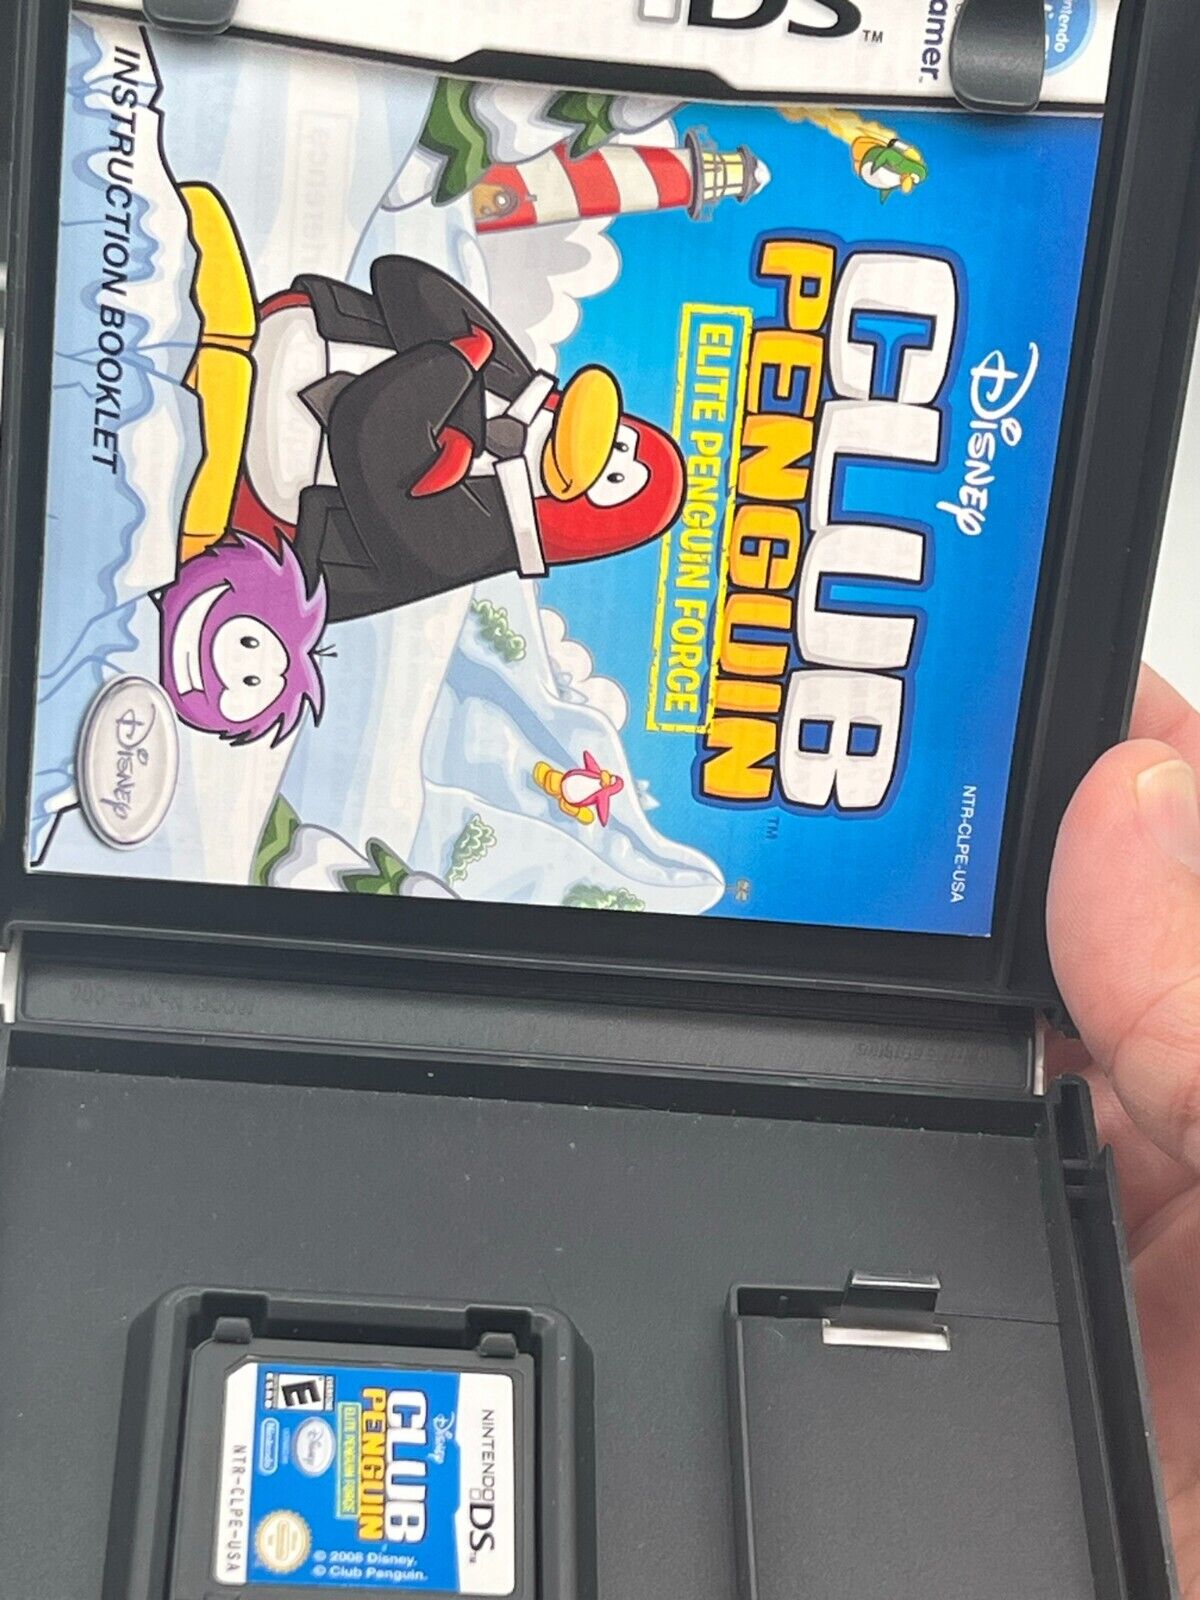 Club Penguin: Elite Penguin Force (Nintendo DS, 2008) - Tested